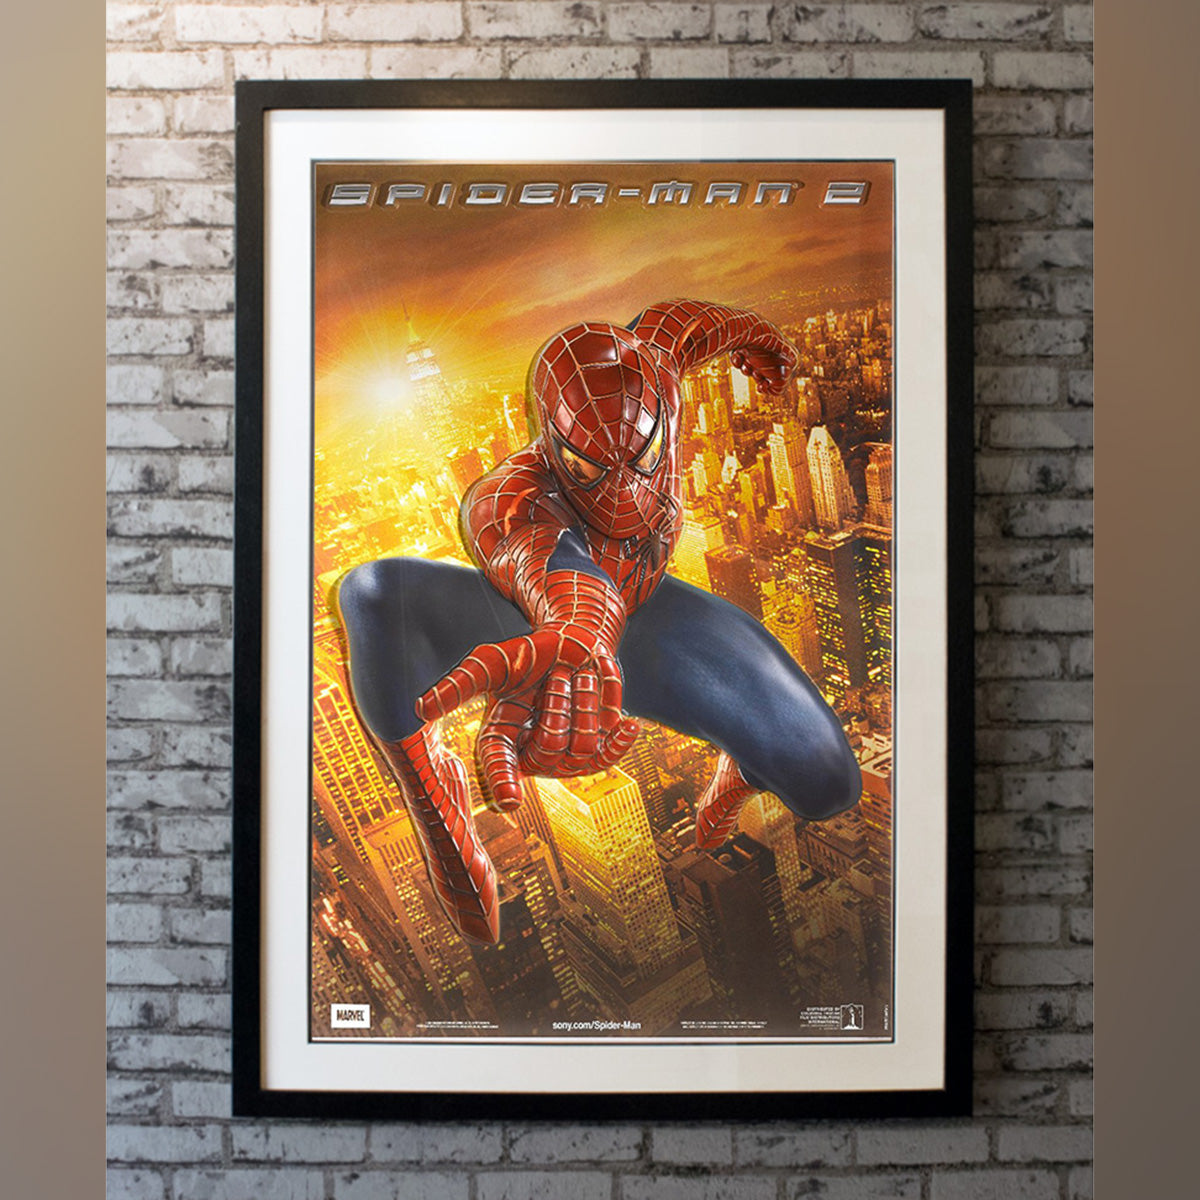 Original Movie Poster of Spider-man 2 (2004) - Plastic 3d Relief Poster